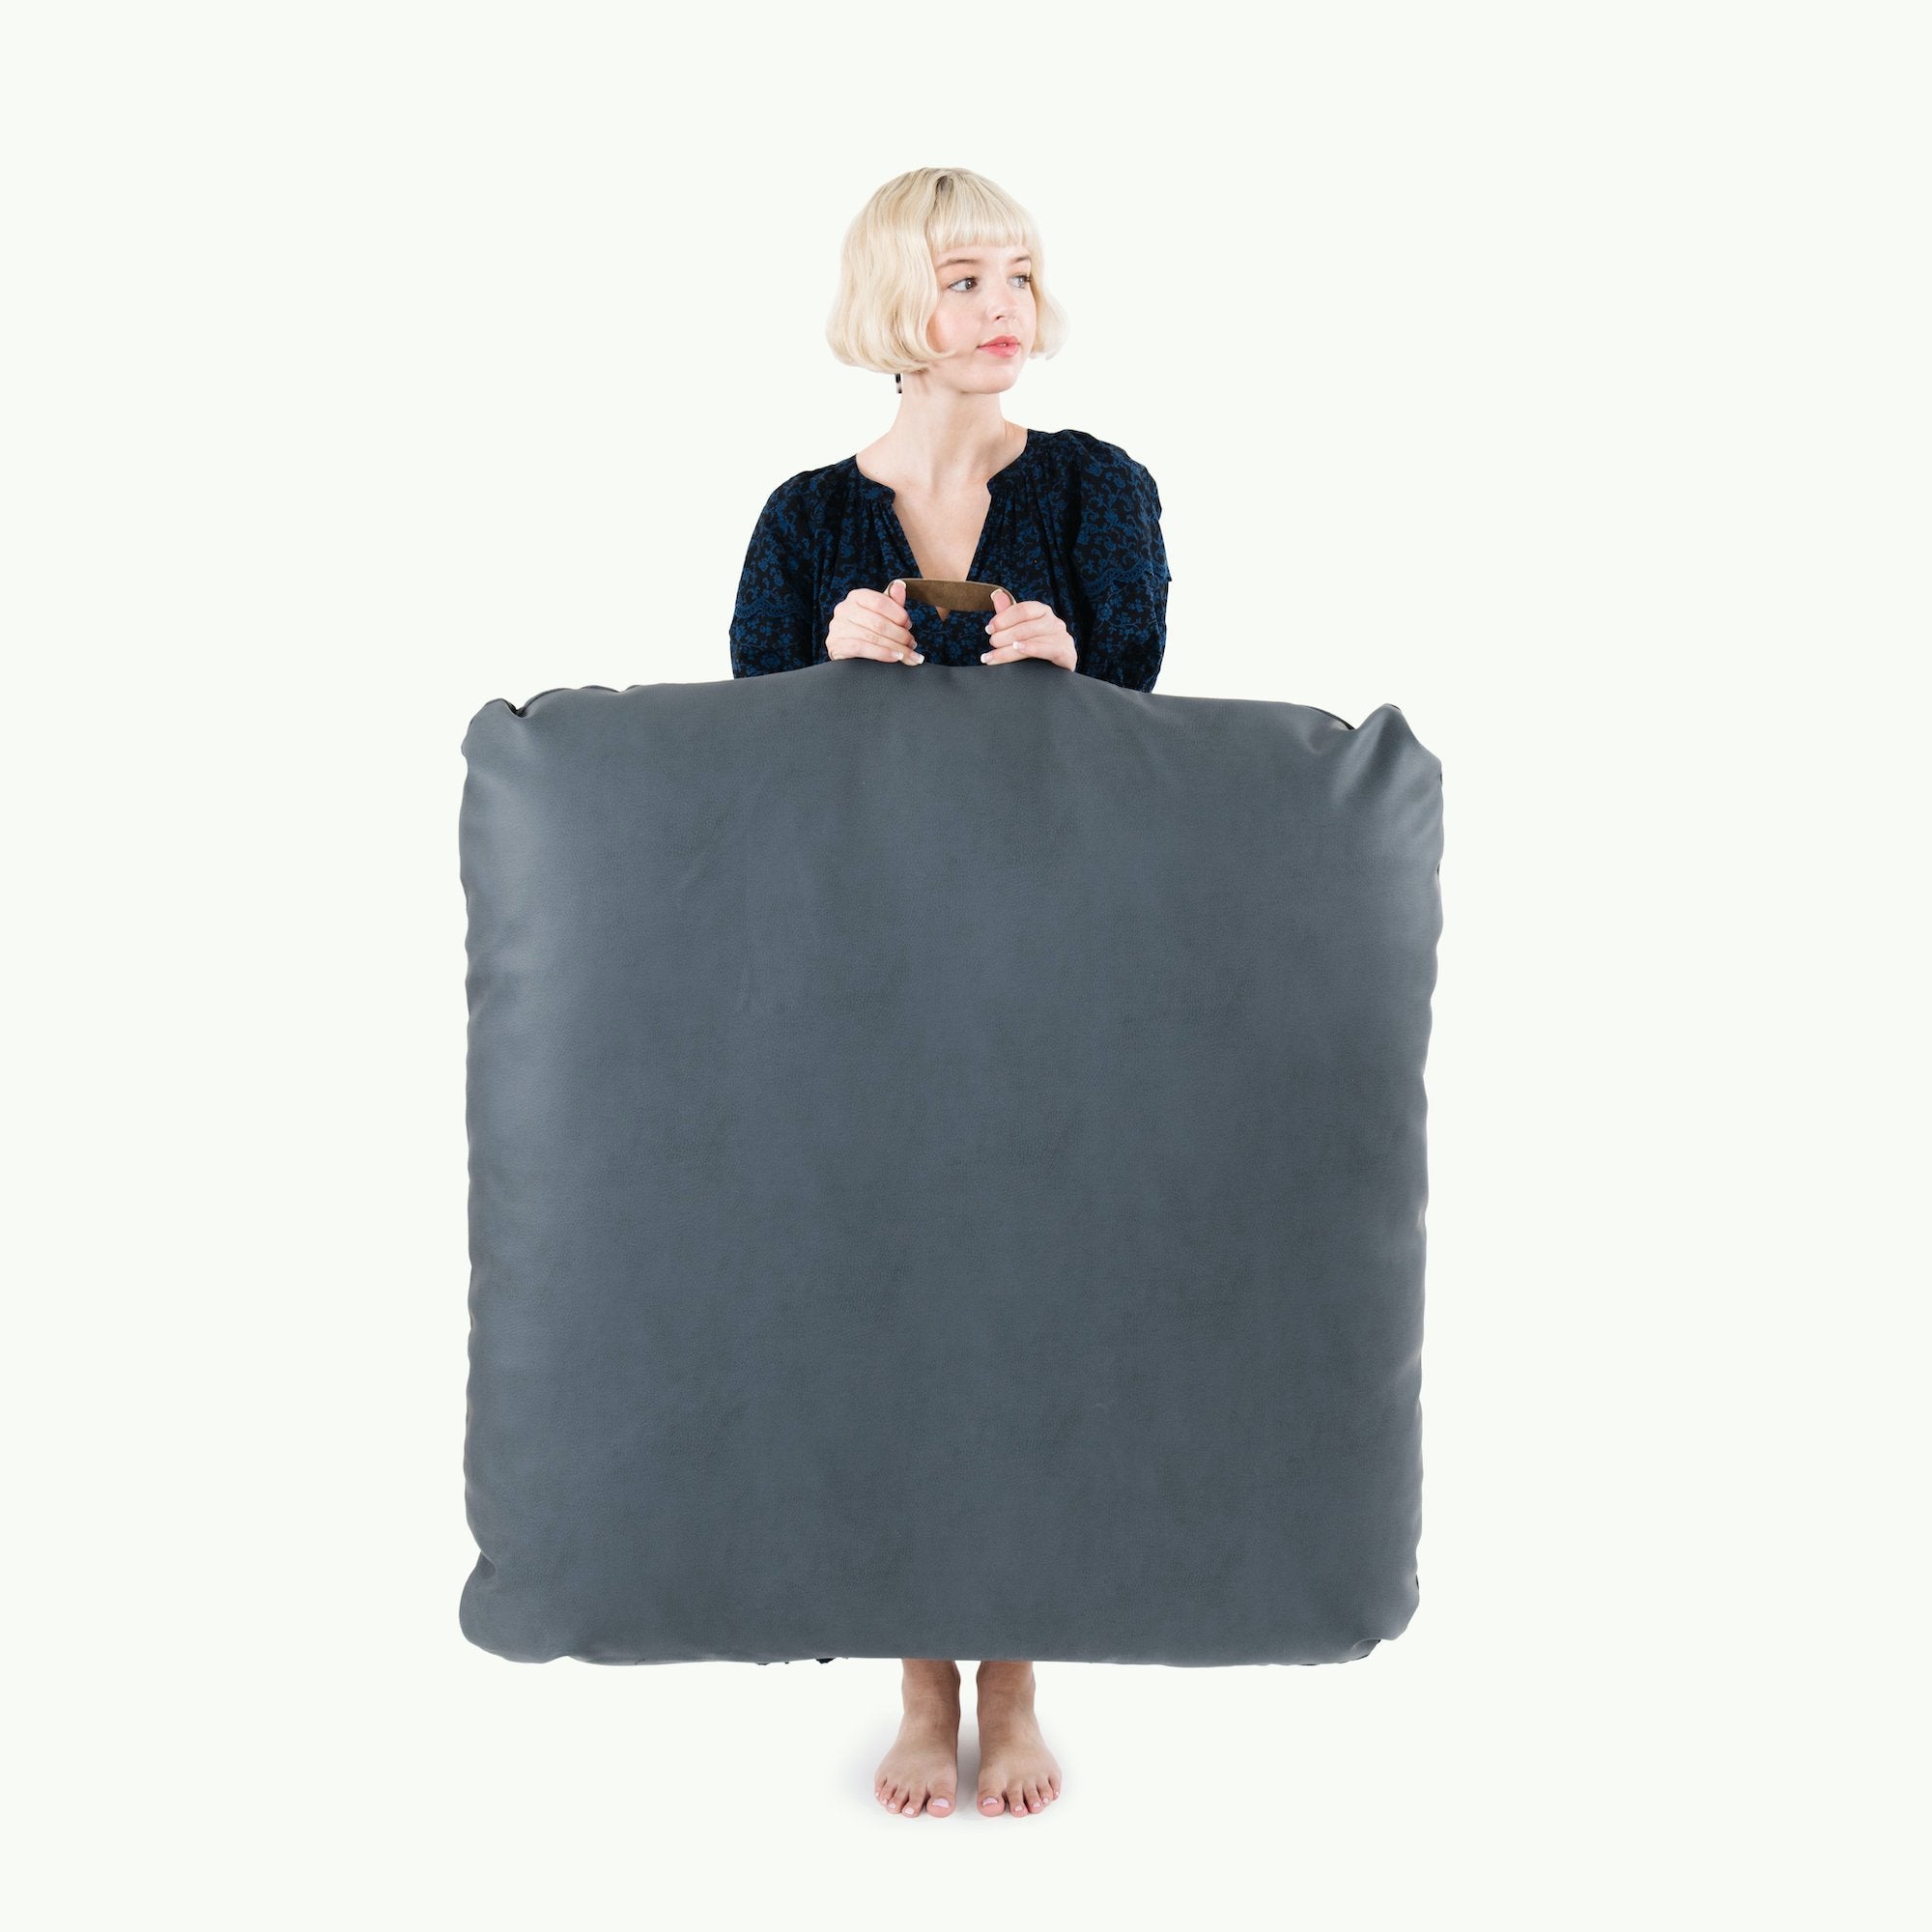 Nightfall (on sale) / Square@Woman holding the Nightfall Square Floor Cushion